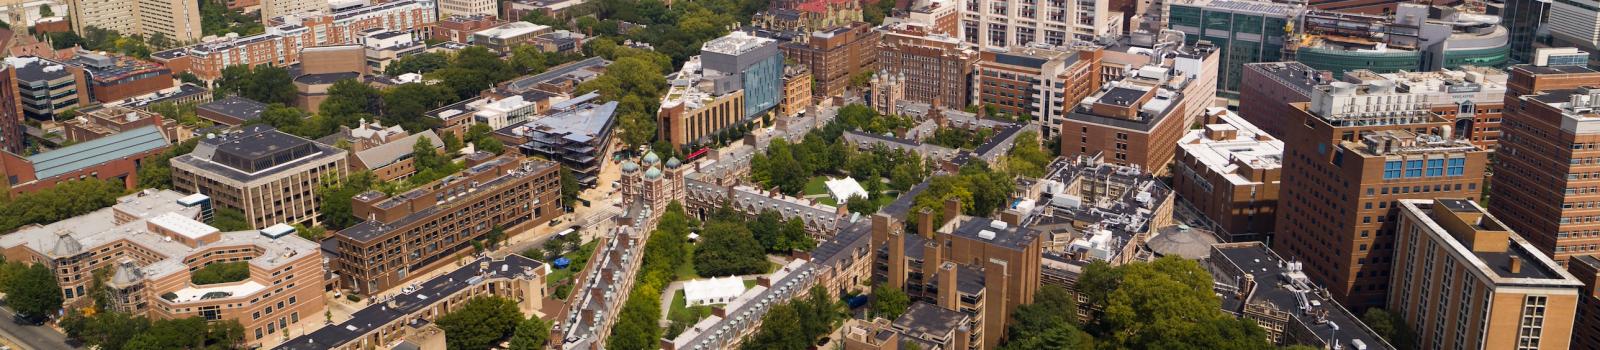 Overhead view of Penn's campus in Philadelphia